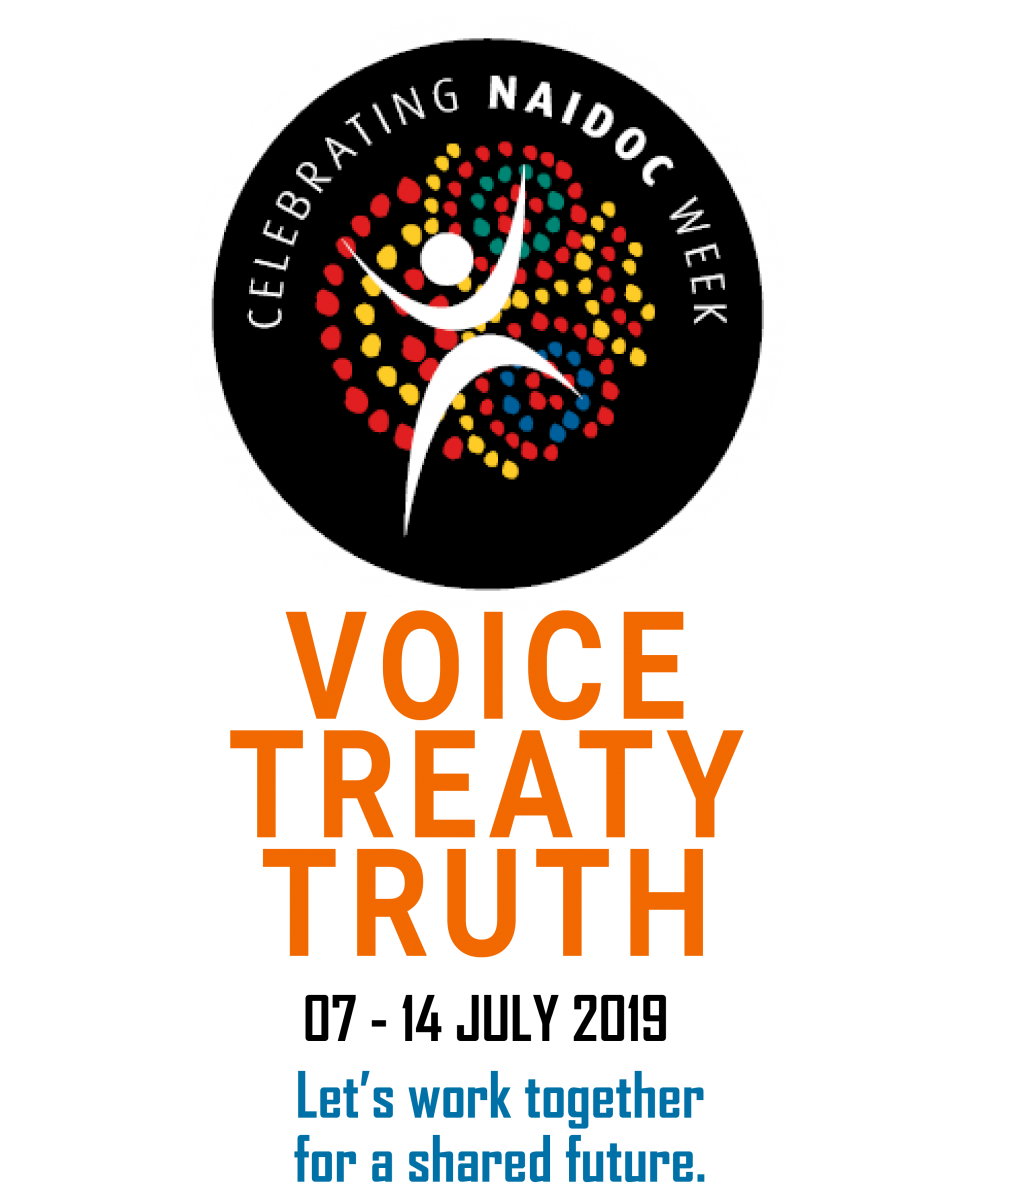 NAIDOC Week, NAIDOC, Voice, Treaty, Truth, NAIDOC Week 2019, KARI, Community, KARI Community, Events, Culture, Celebrating Culture, Celebrations, Community Events, Aboriginal Culture